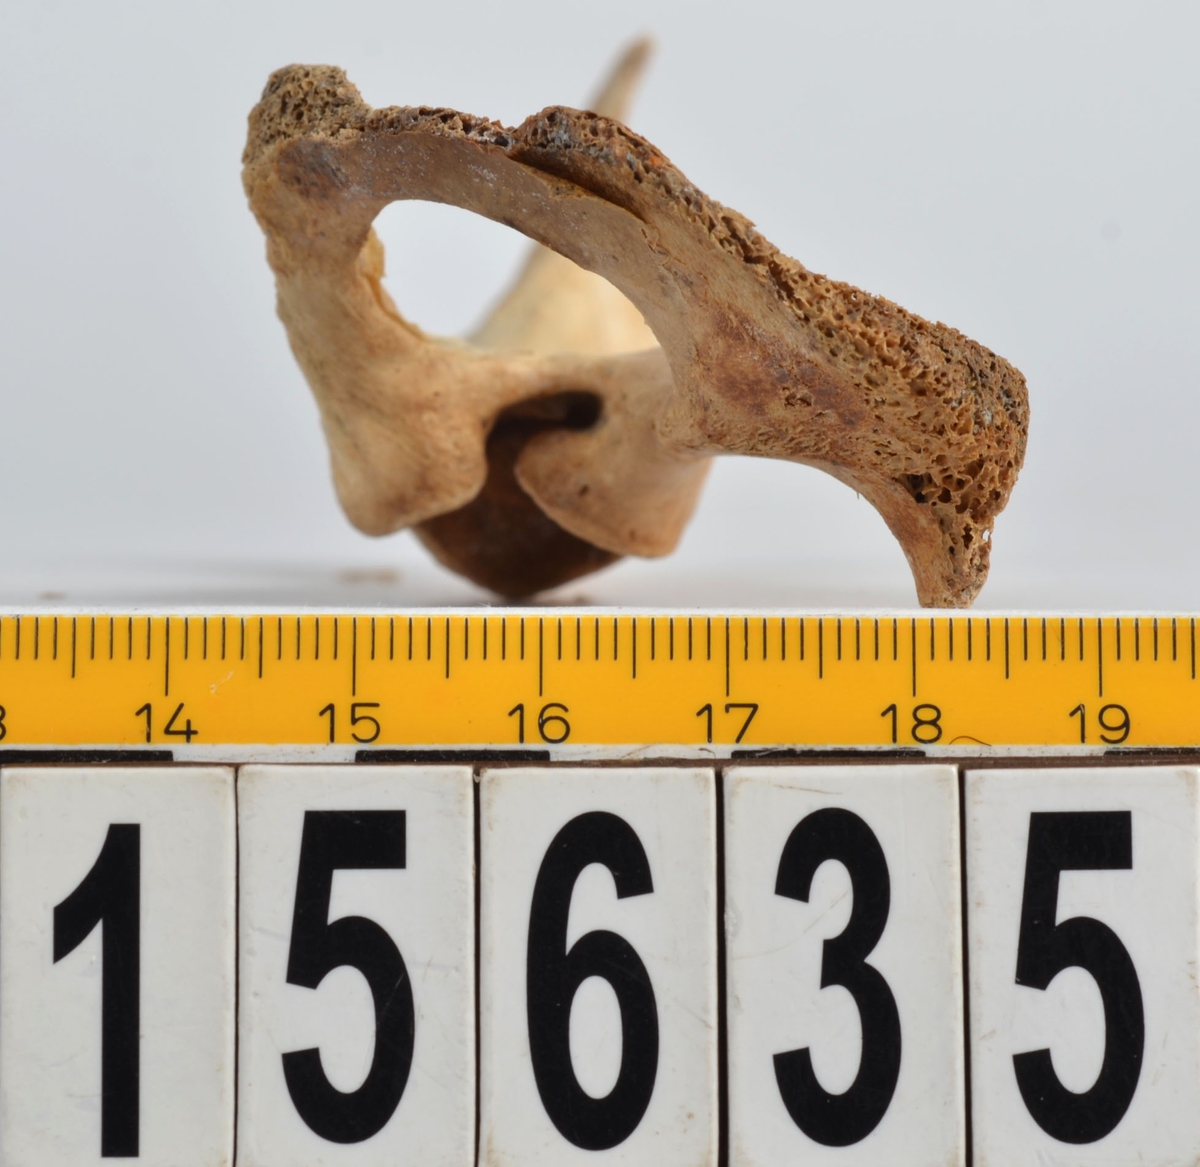 Ben från får/get (Ovis aries/Capra hircus.
1 st. halskota (vertebrae cervicale).
3 st. bröstkotor (vertebrae thoracale).
1 st. ledyta till strålben (epifys av radius).
1 st. skulderblad (scapula).
1 st. del av bäckenben (pelvis).
22 st. delar av revben (costae).
3 st. fragment av revben (costae) från unga djur.
2 st. ledytor till kotkroppar (vertebrae) från unga djur.